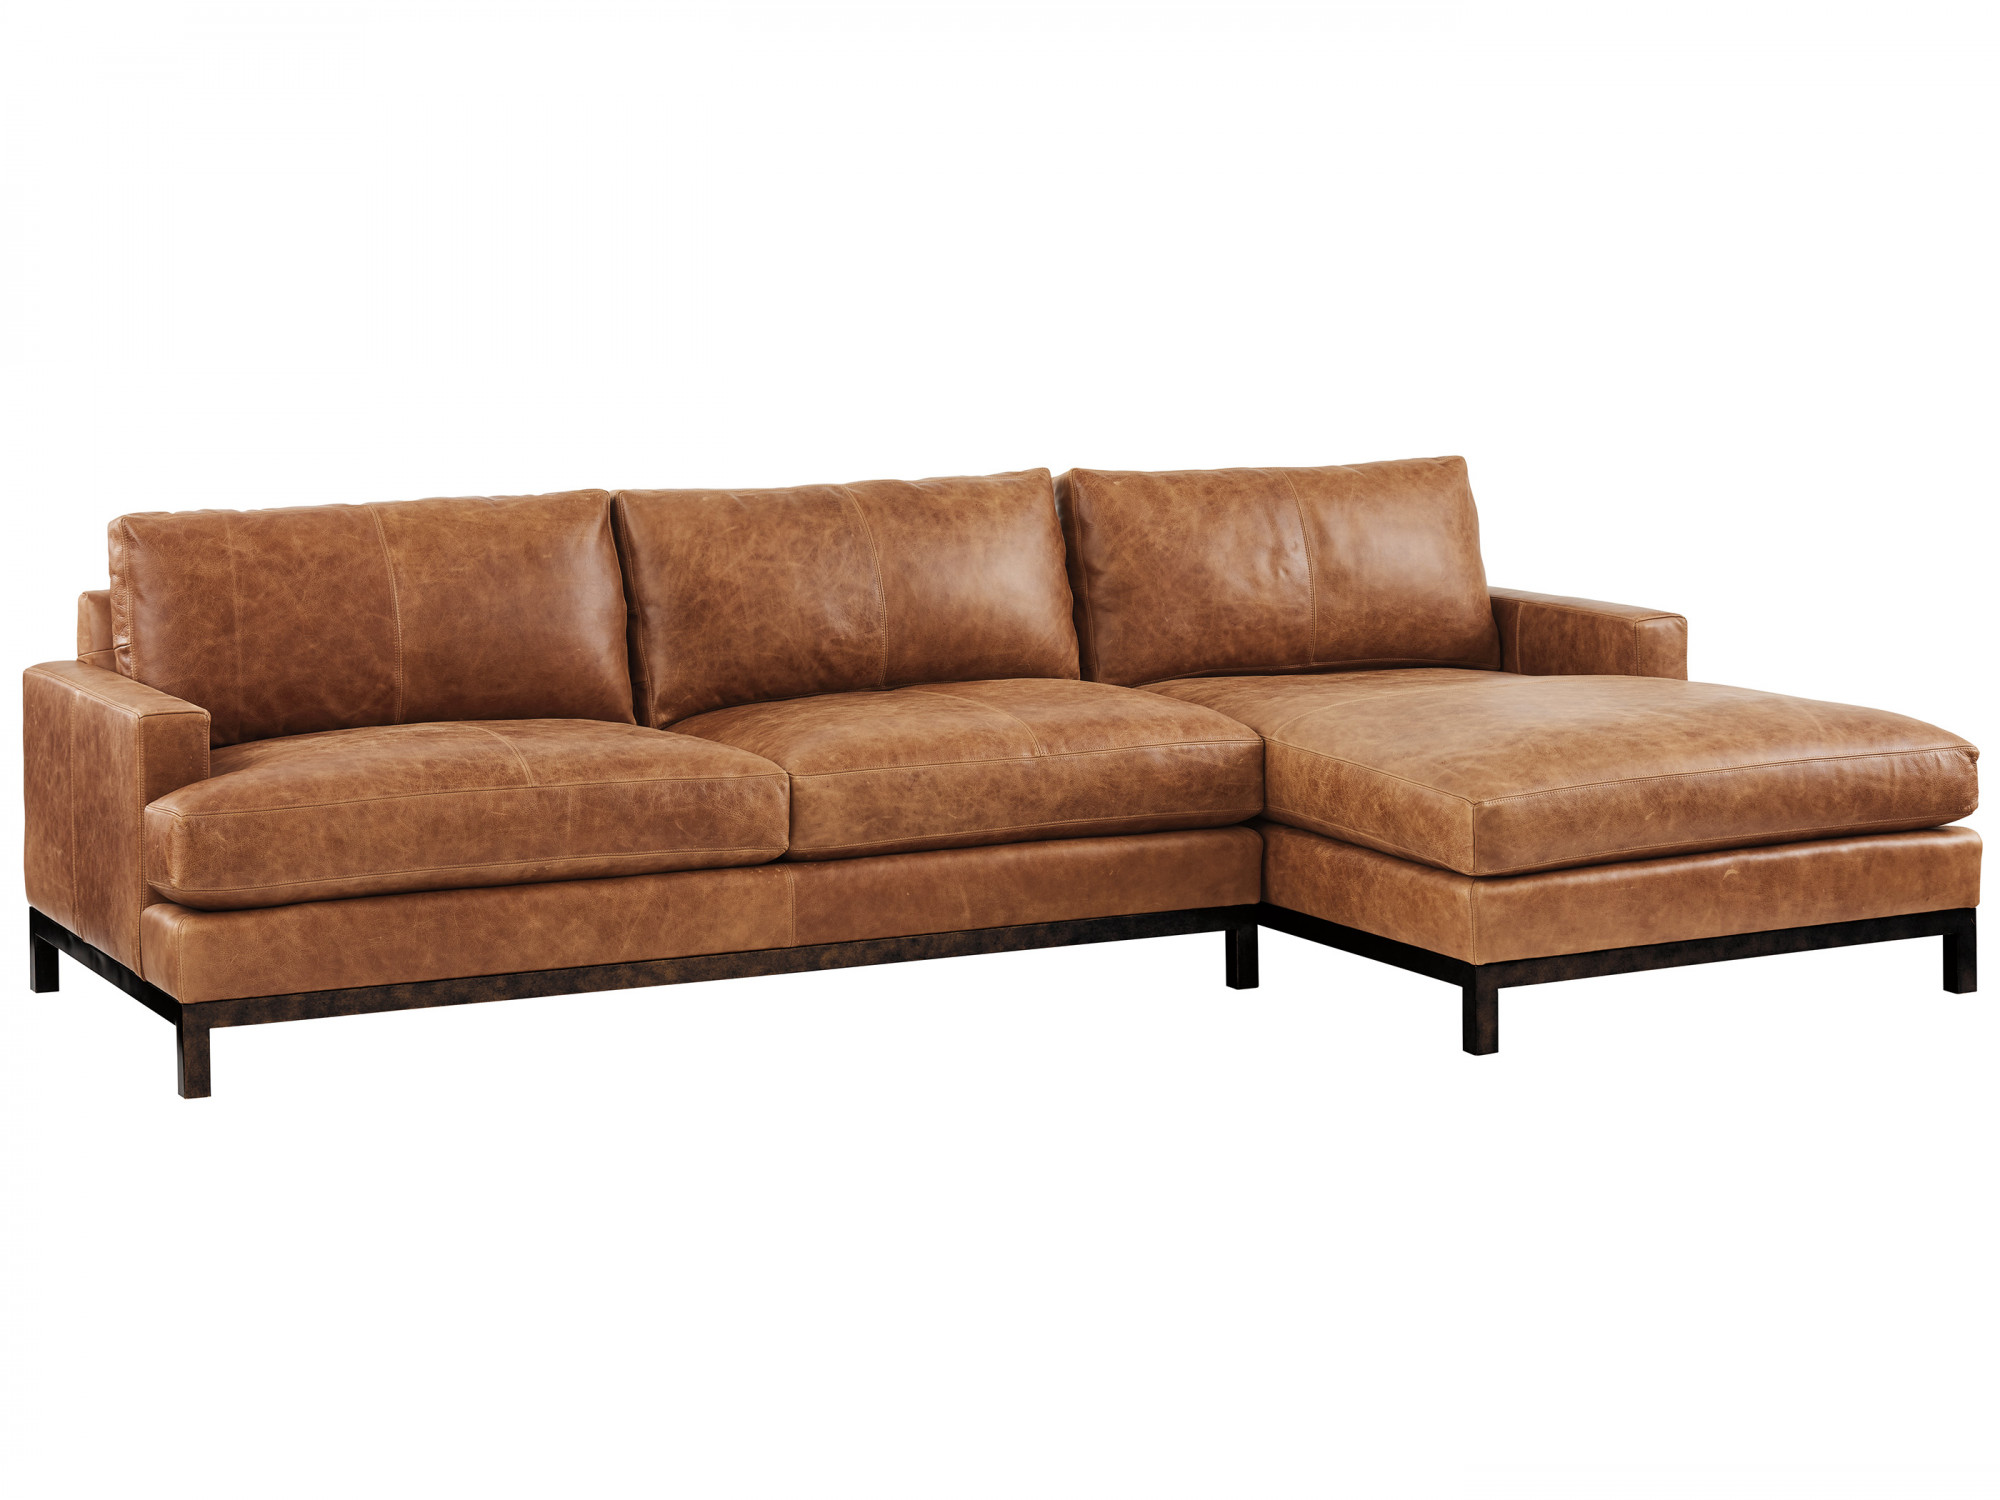 Horizon Leather Sofa Chaise Lexington Home Brands